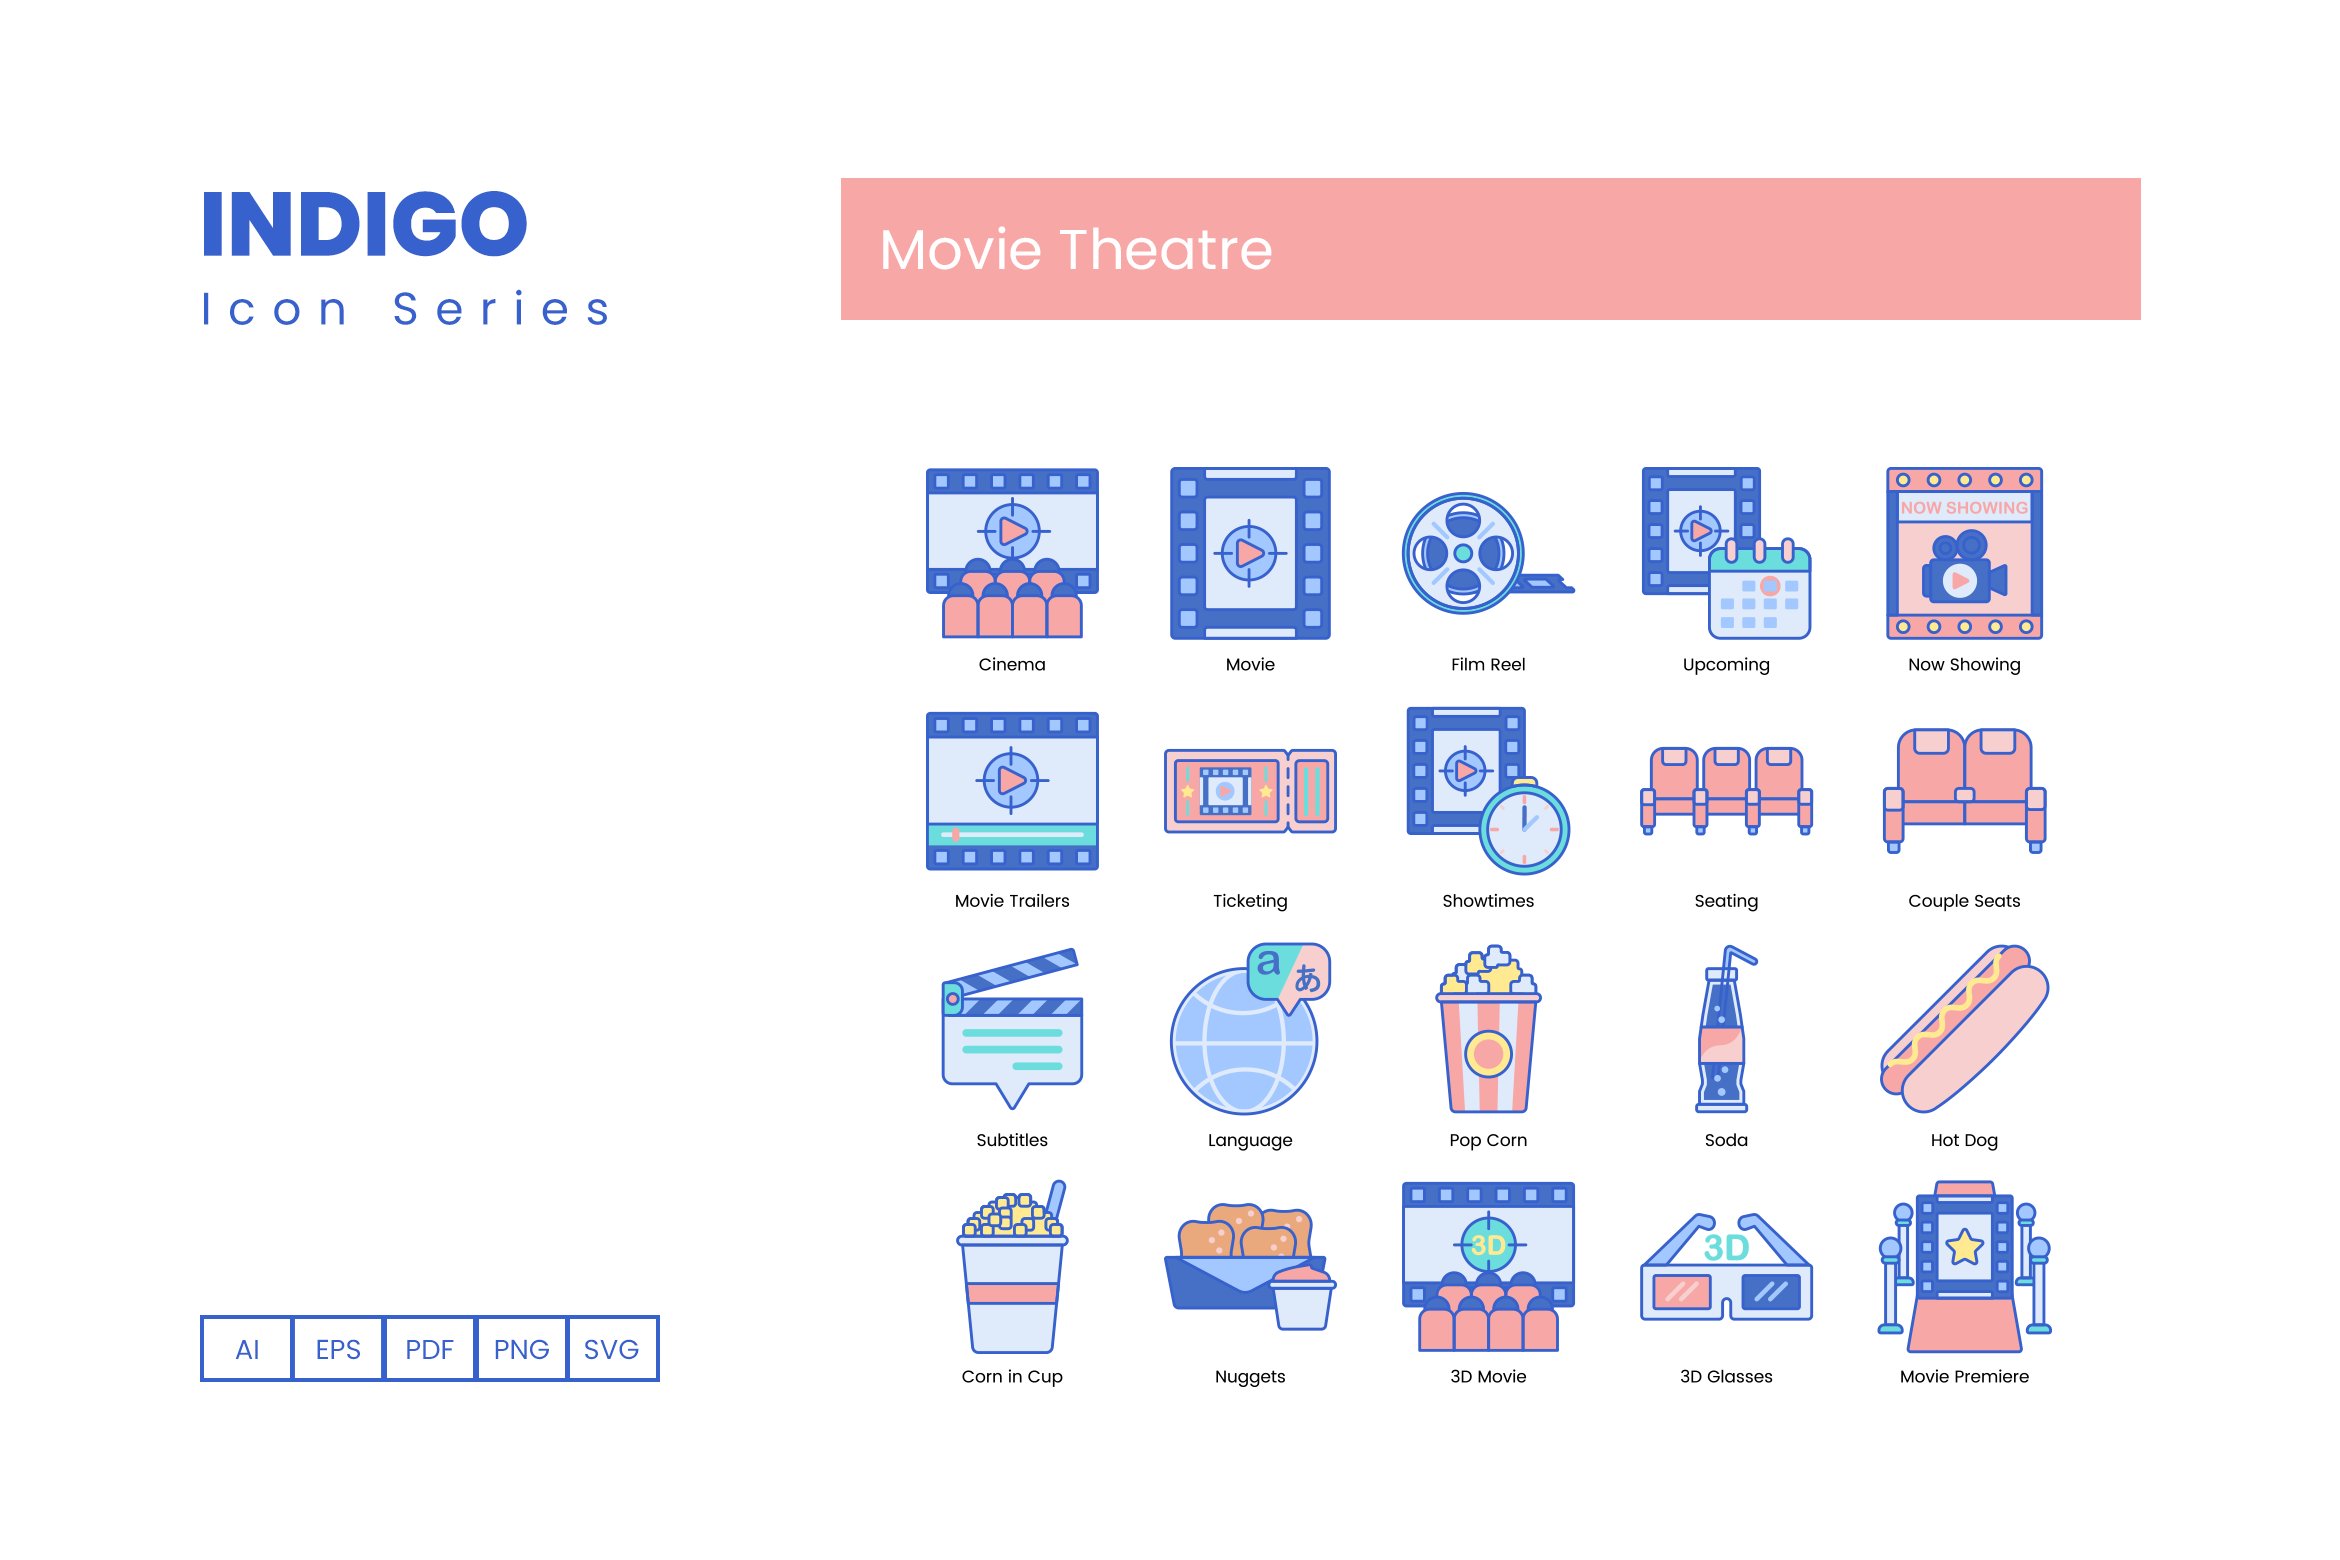 75 Movie Theater Icons - Indigo preview image.